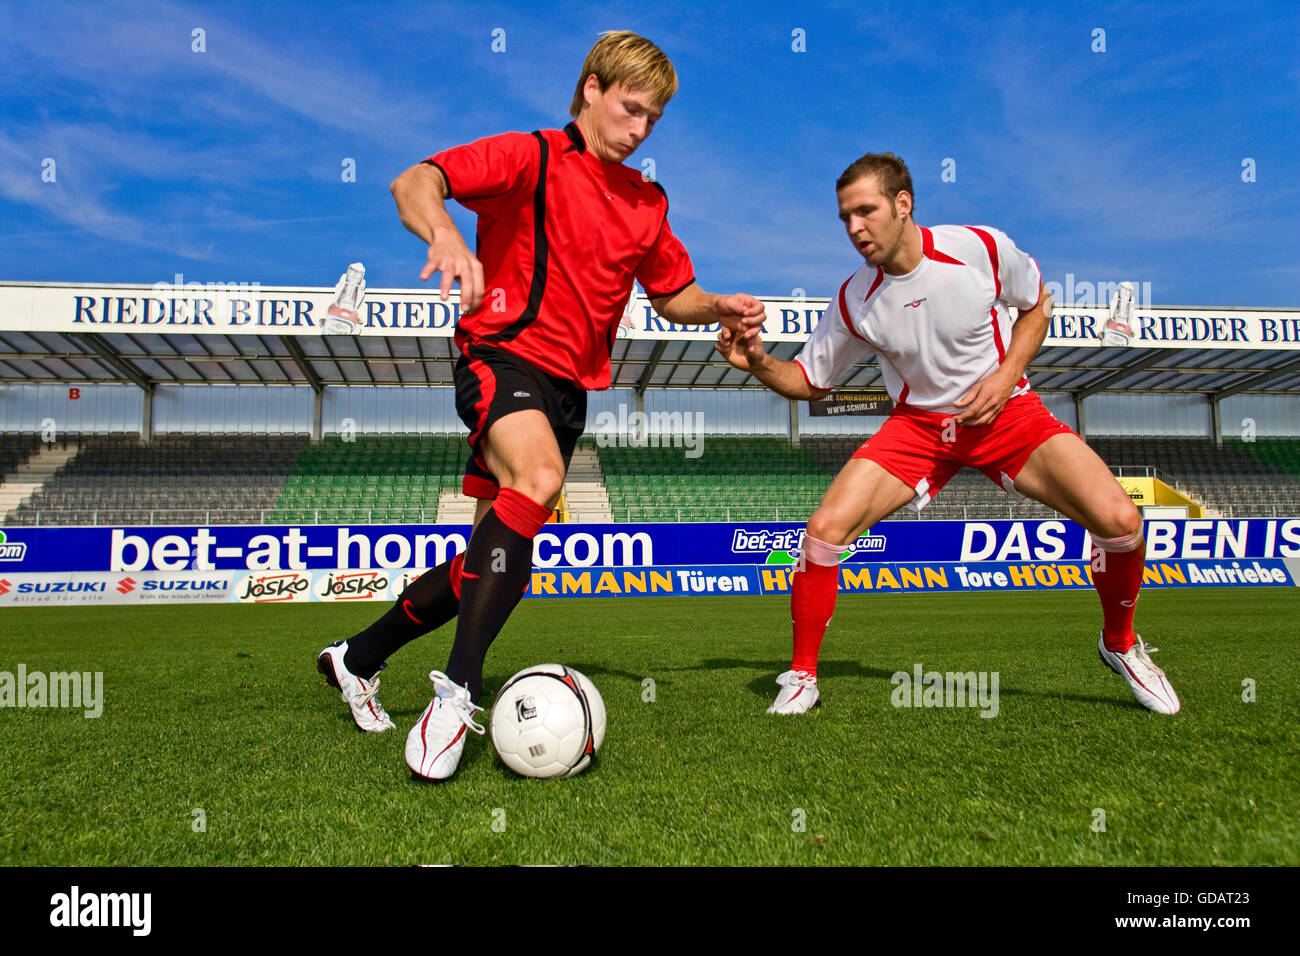 Football,Soccer,action,sport,dribble,defense,duel,ball,men, Stock Photo